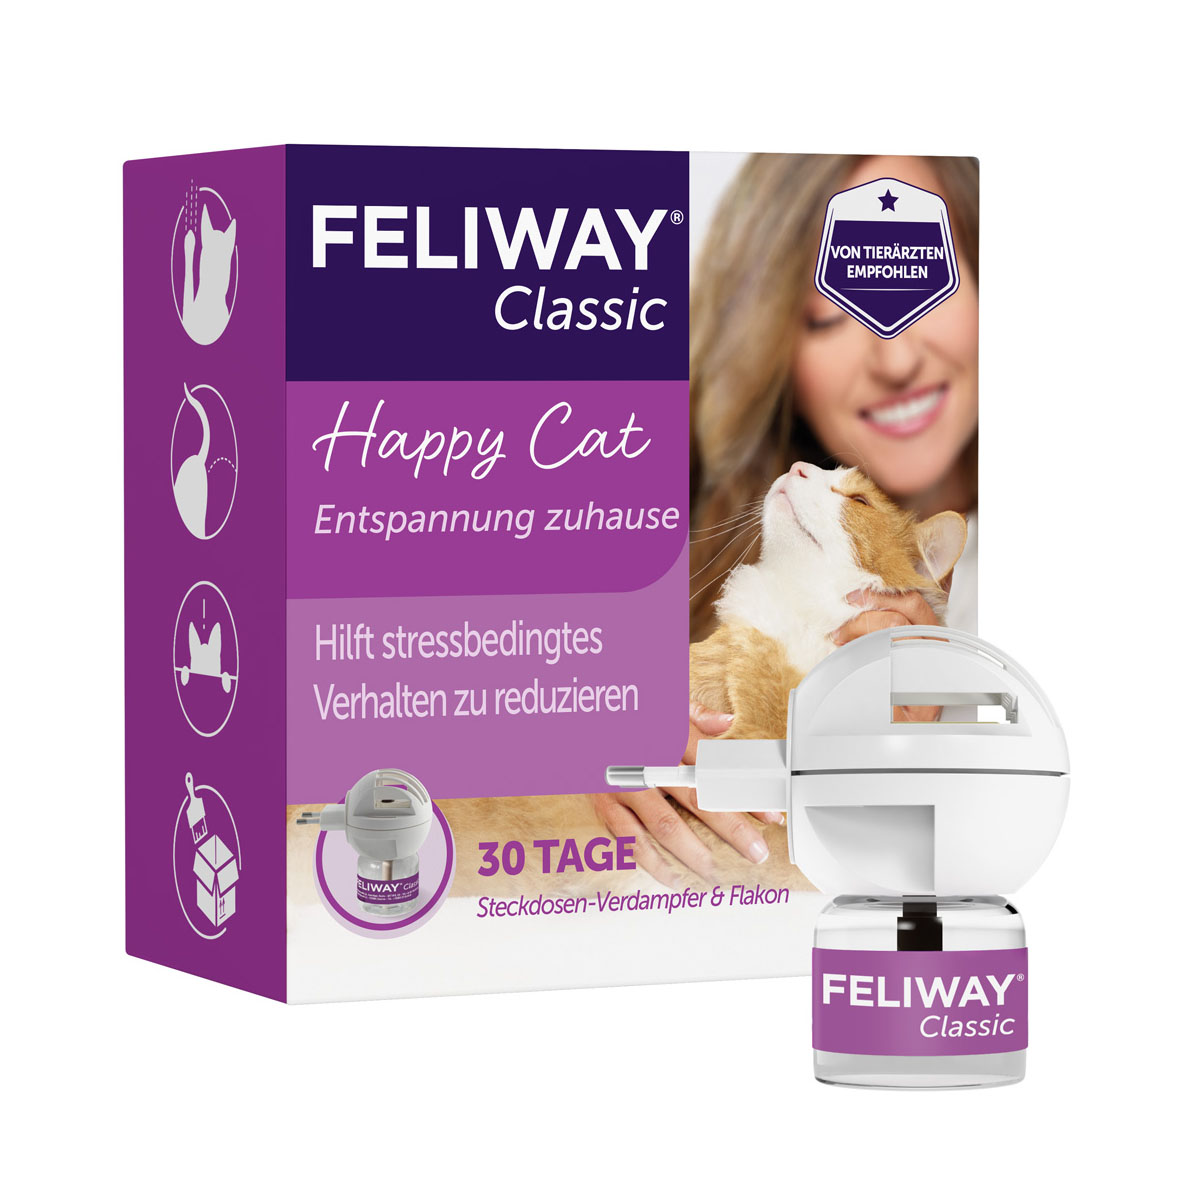 Feliway® Classic Happy Home difuzér , startovací sada, 48 ml